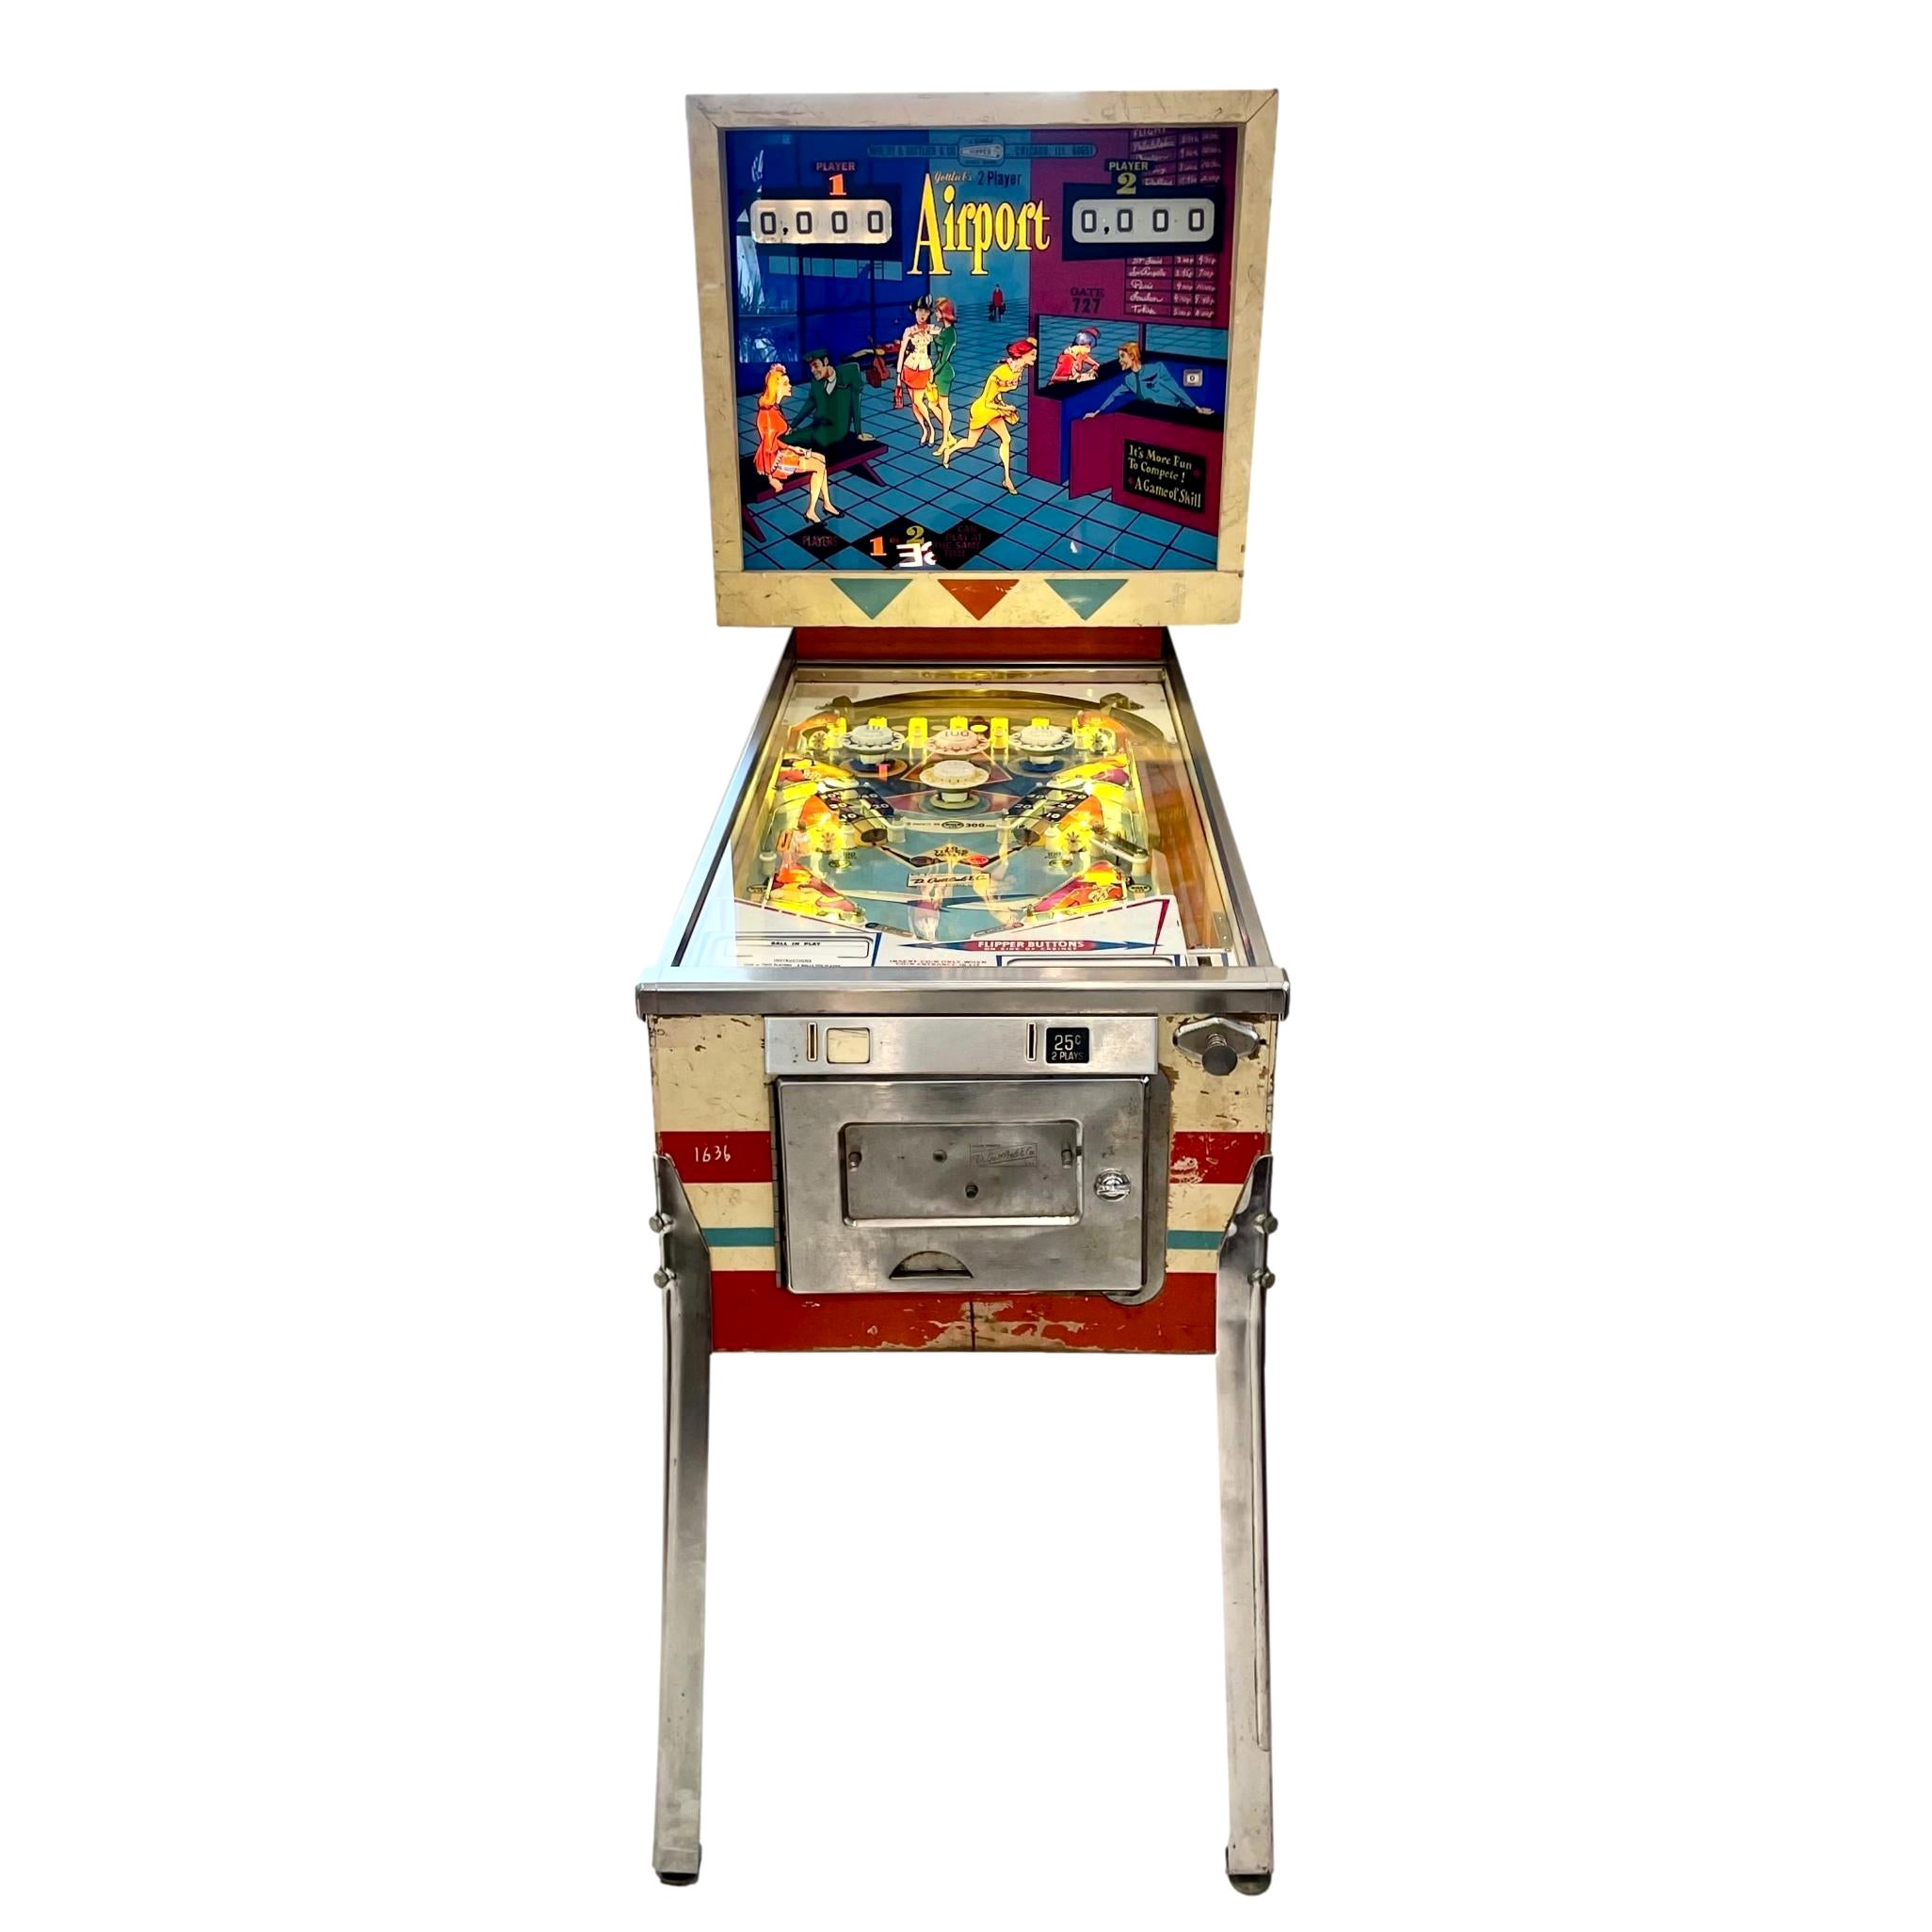 Airport Pinball Arcade Spiel, 1969 USA